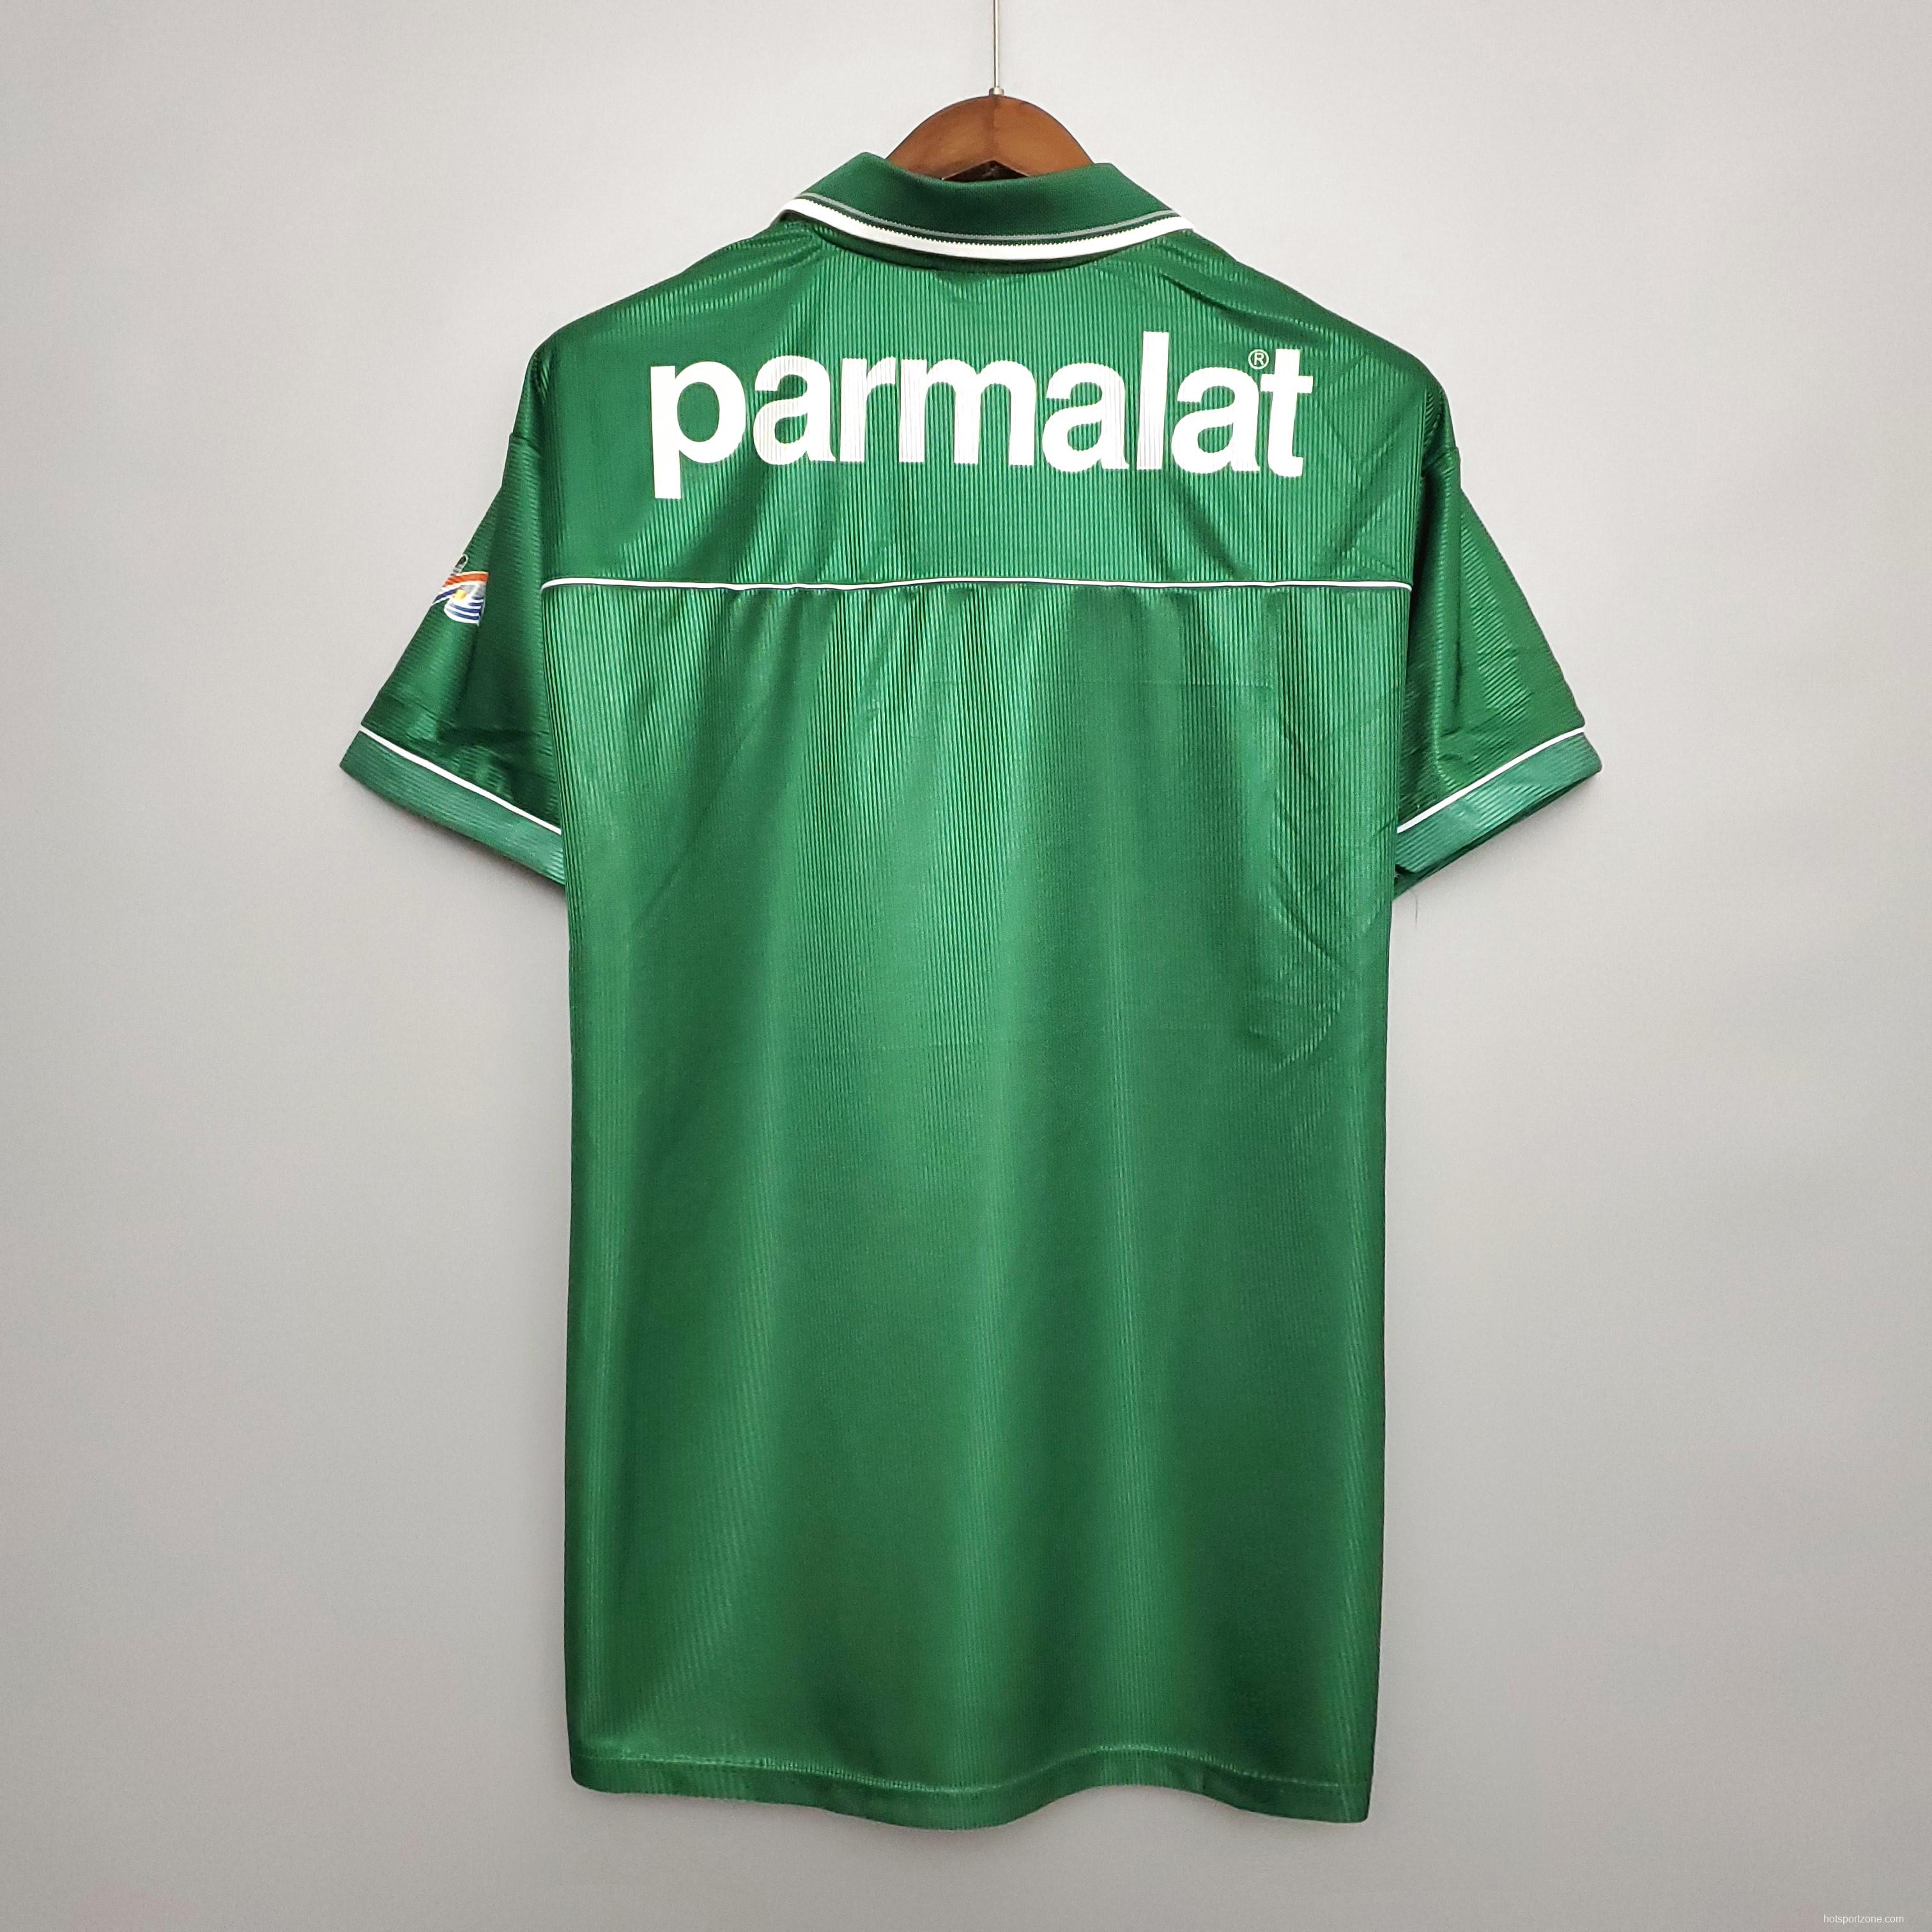 Retro Palmeiras 100th Anniversary Edition Soccer Jersey